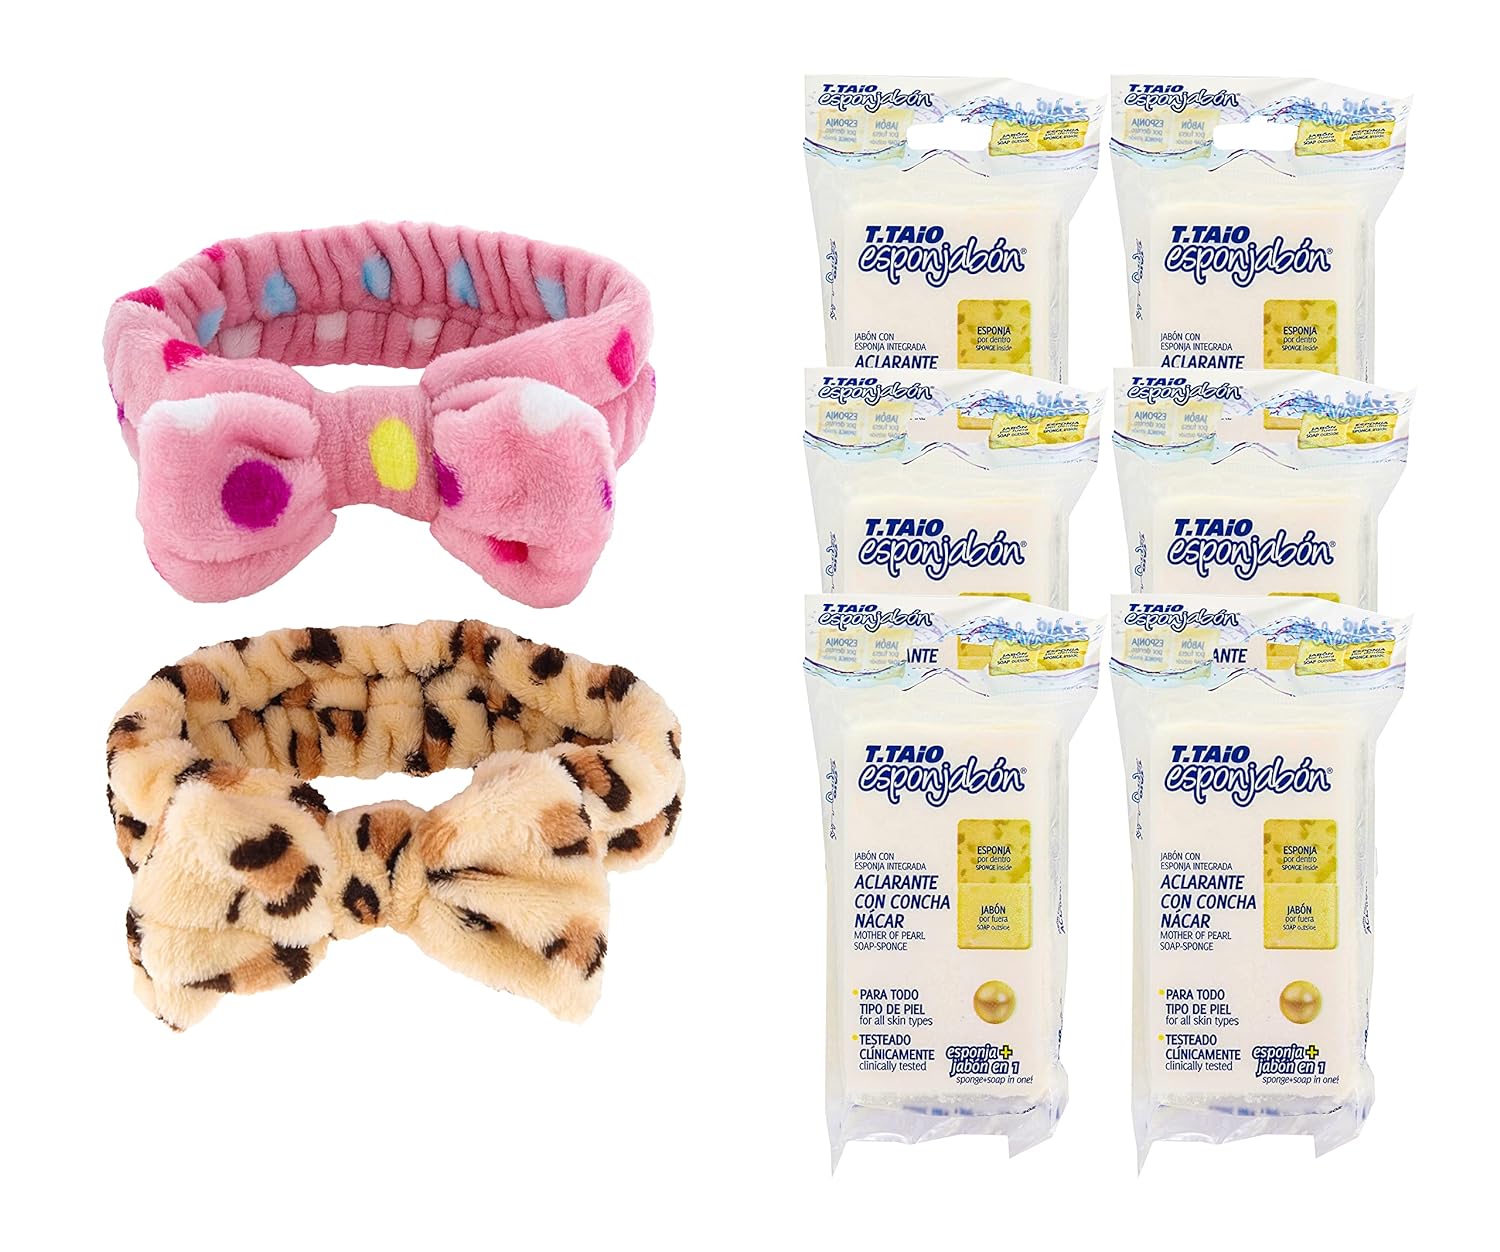 T. Taio Esponjabon Skin Lightening Pearl Soap Sponge (Concha Nacar) Pack of 6 Bundle with 2 Premium Penguin Spa Bow Headbands - Designs May Vary